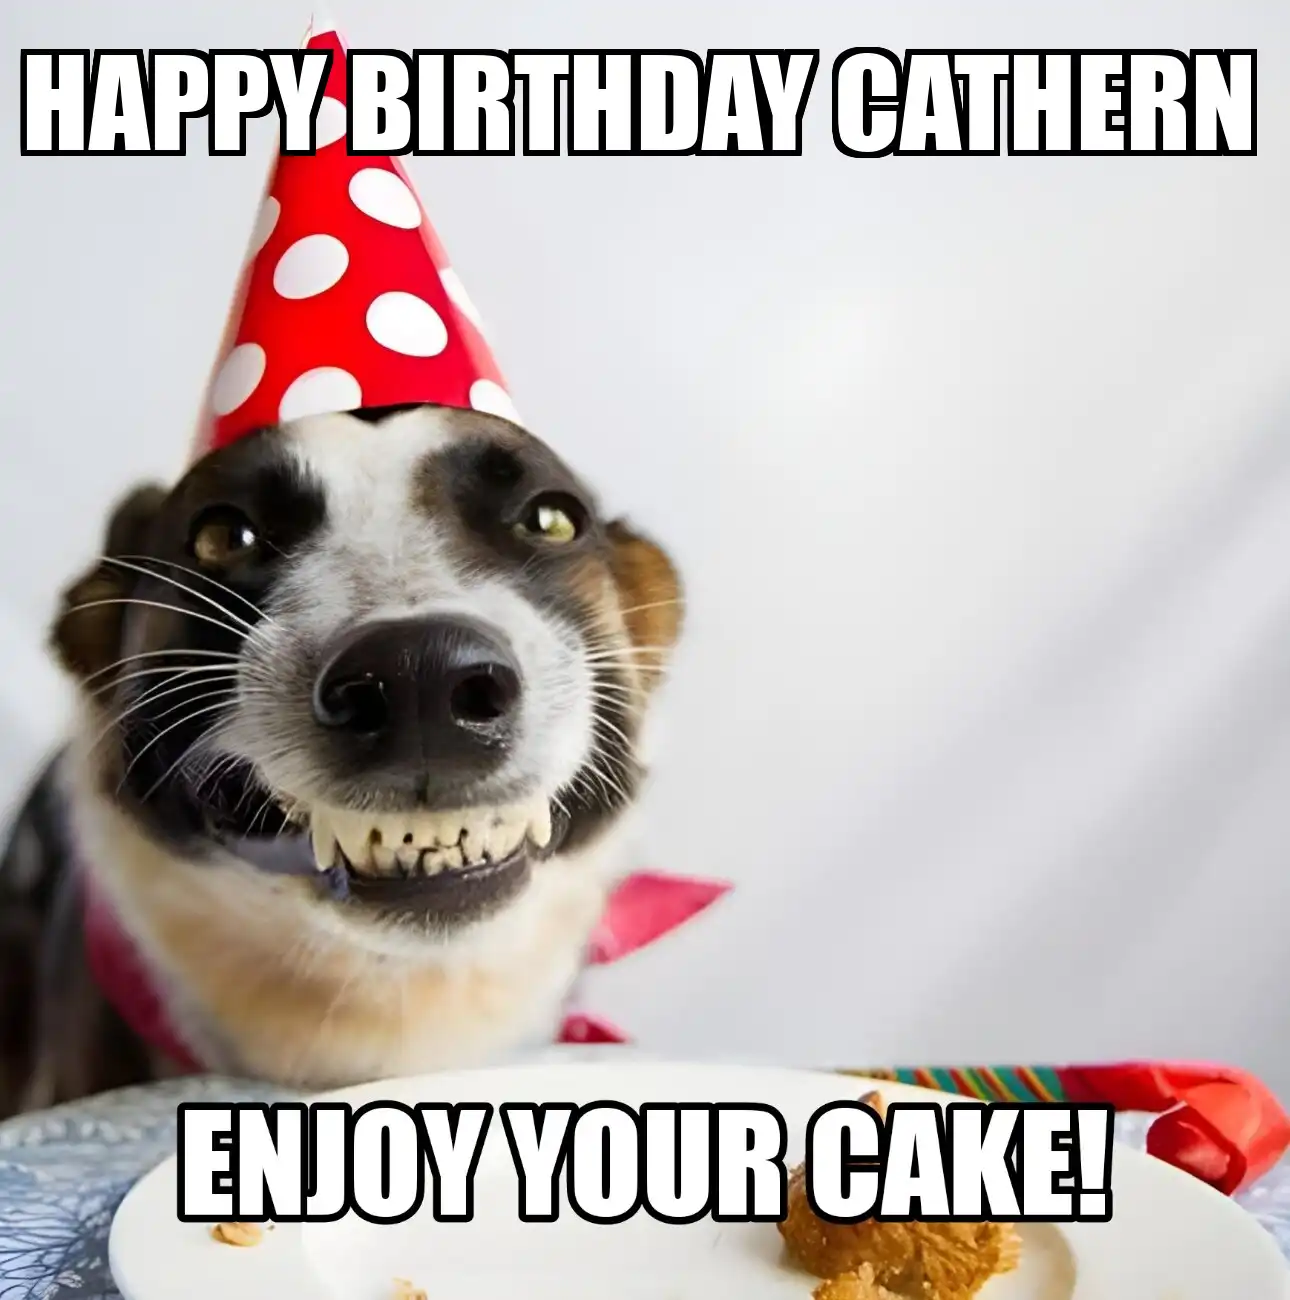 Happy Birthday Cathern Enjoy Your Cake Dog Meme